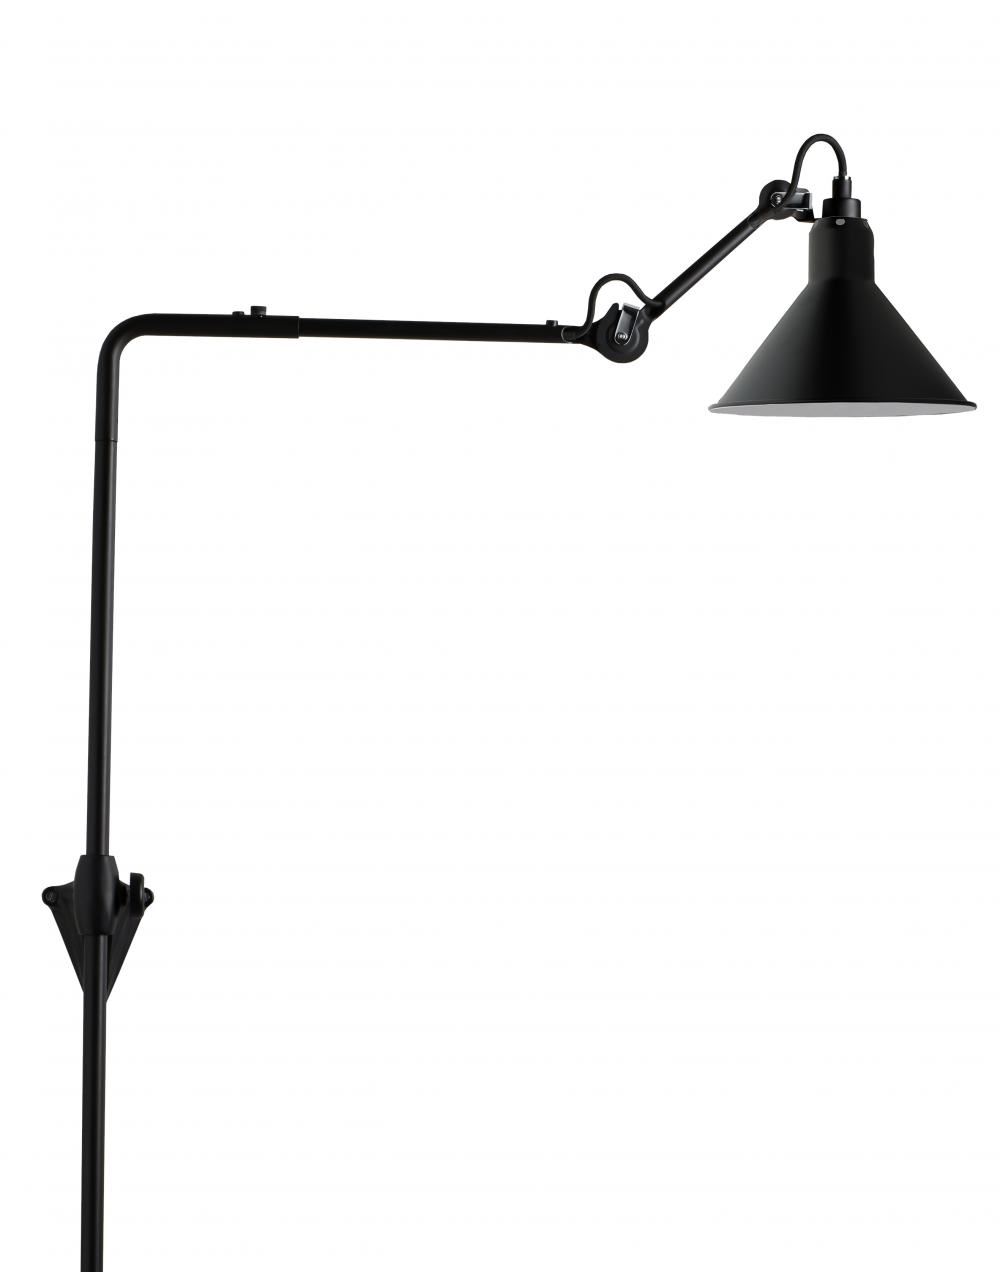 Lampe Gras 216 Wall Light Black Shade Conic Shade